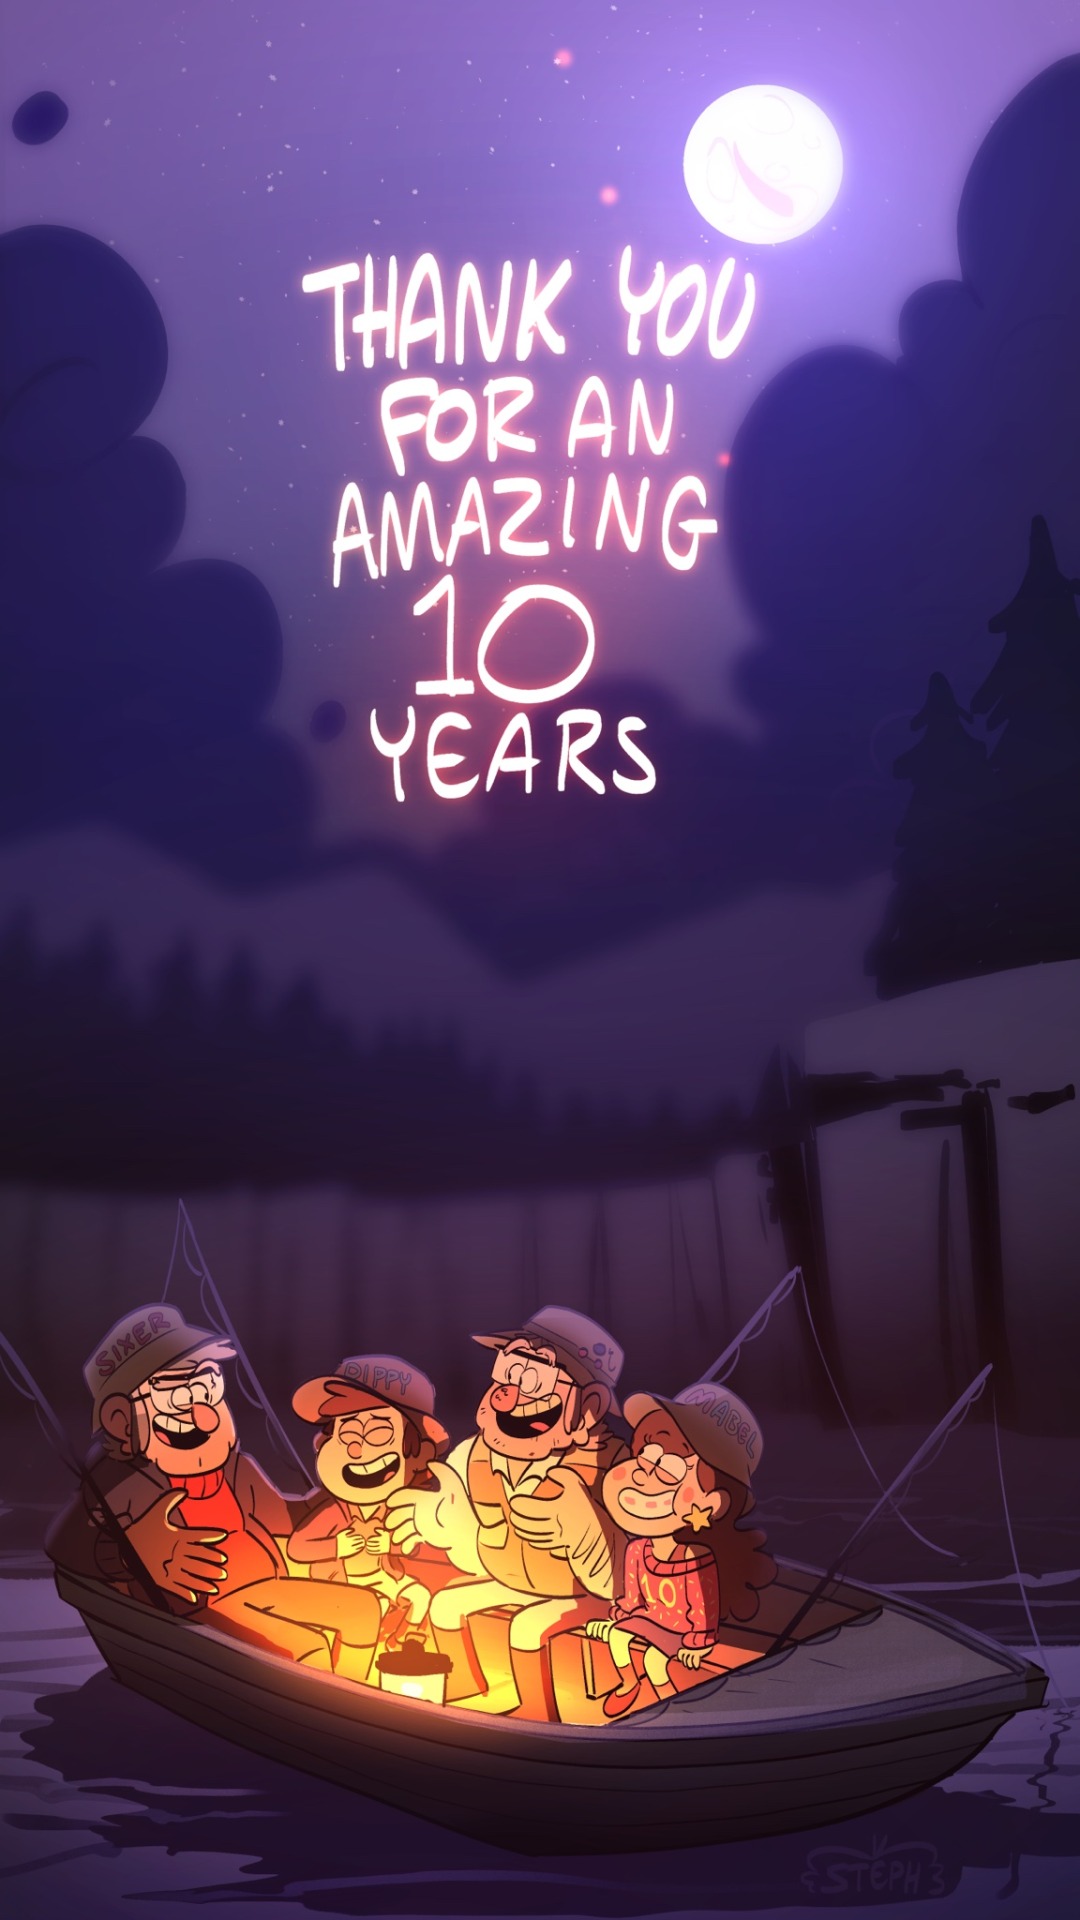 The Amazing World Of Gravity Falls on Tumblr